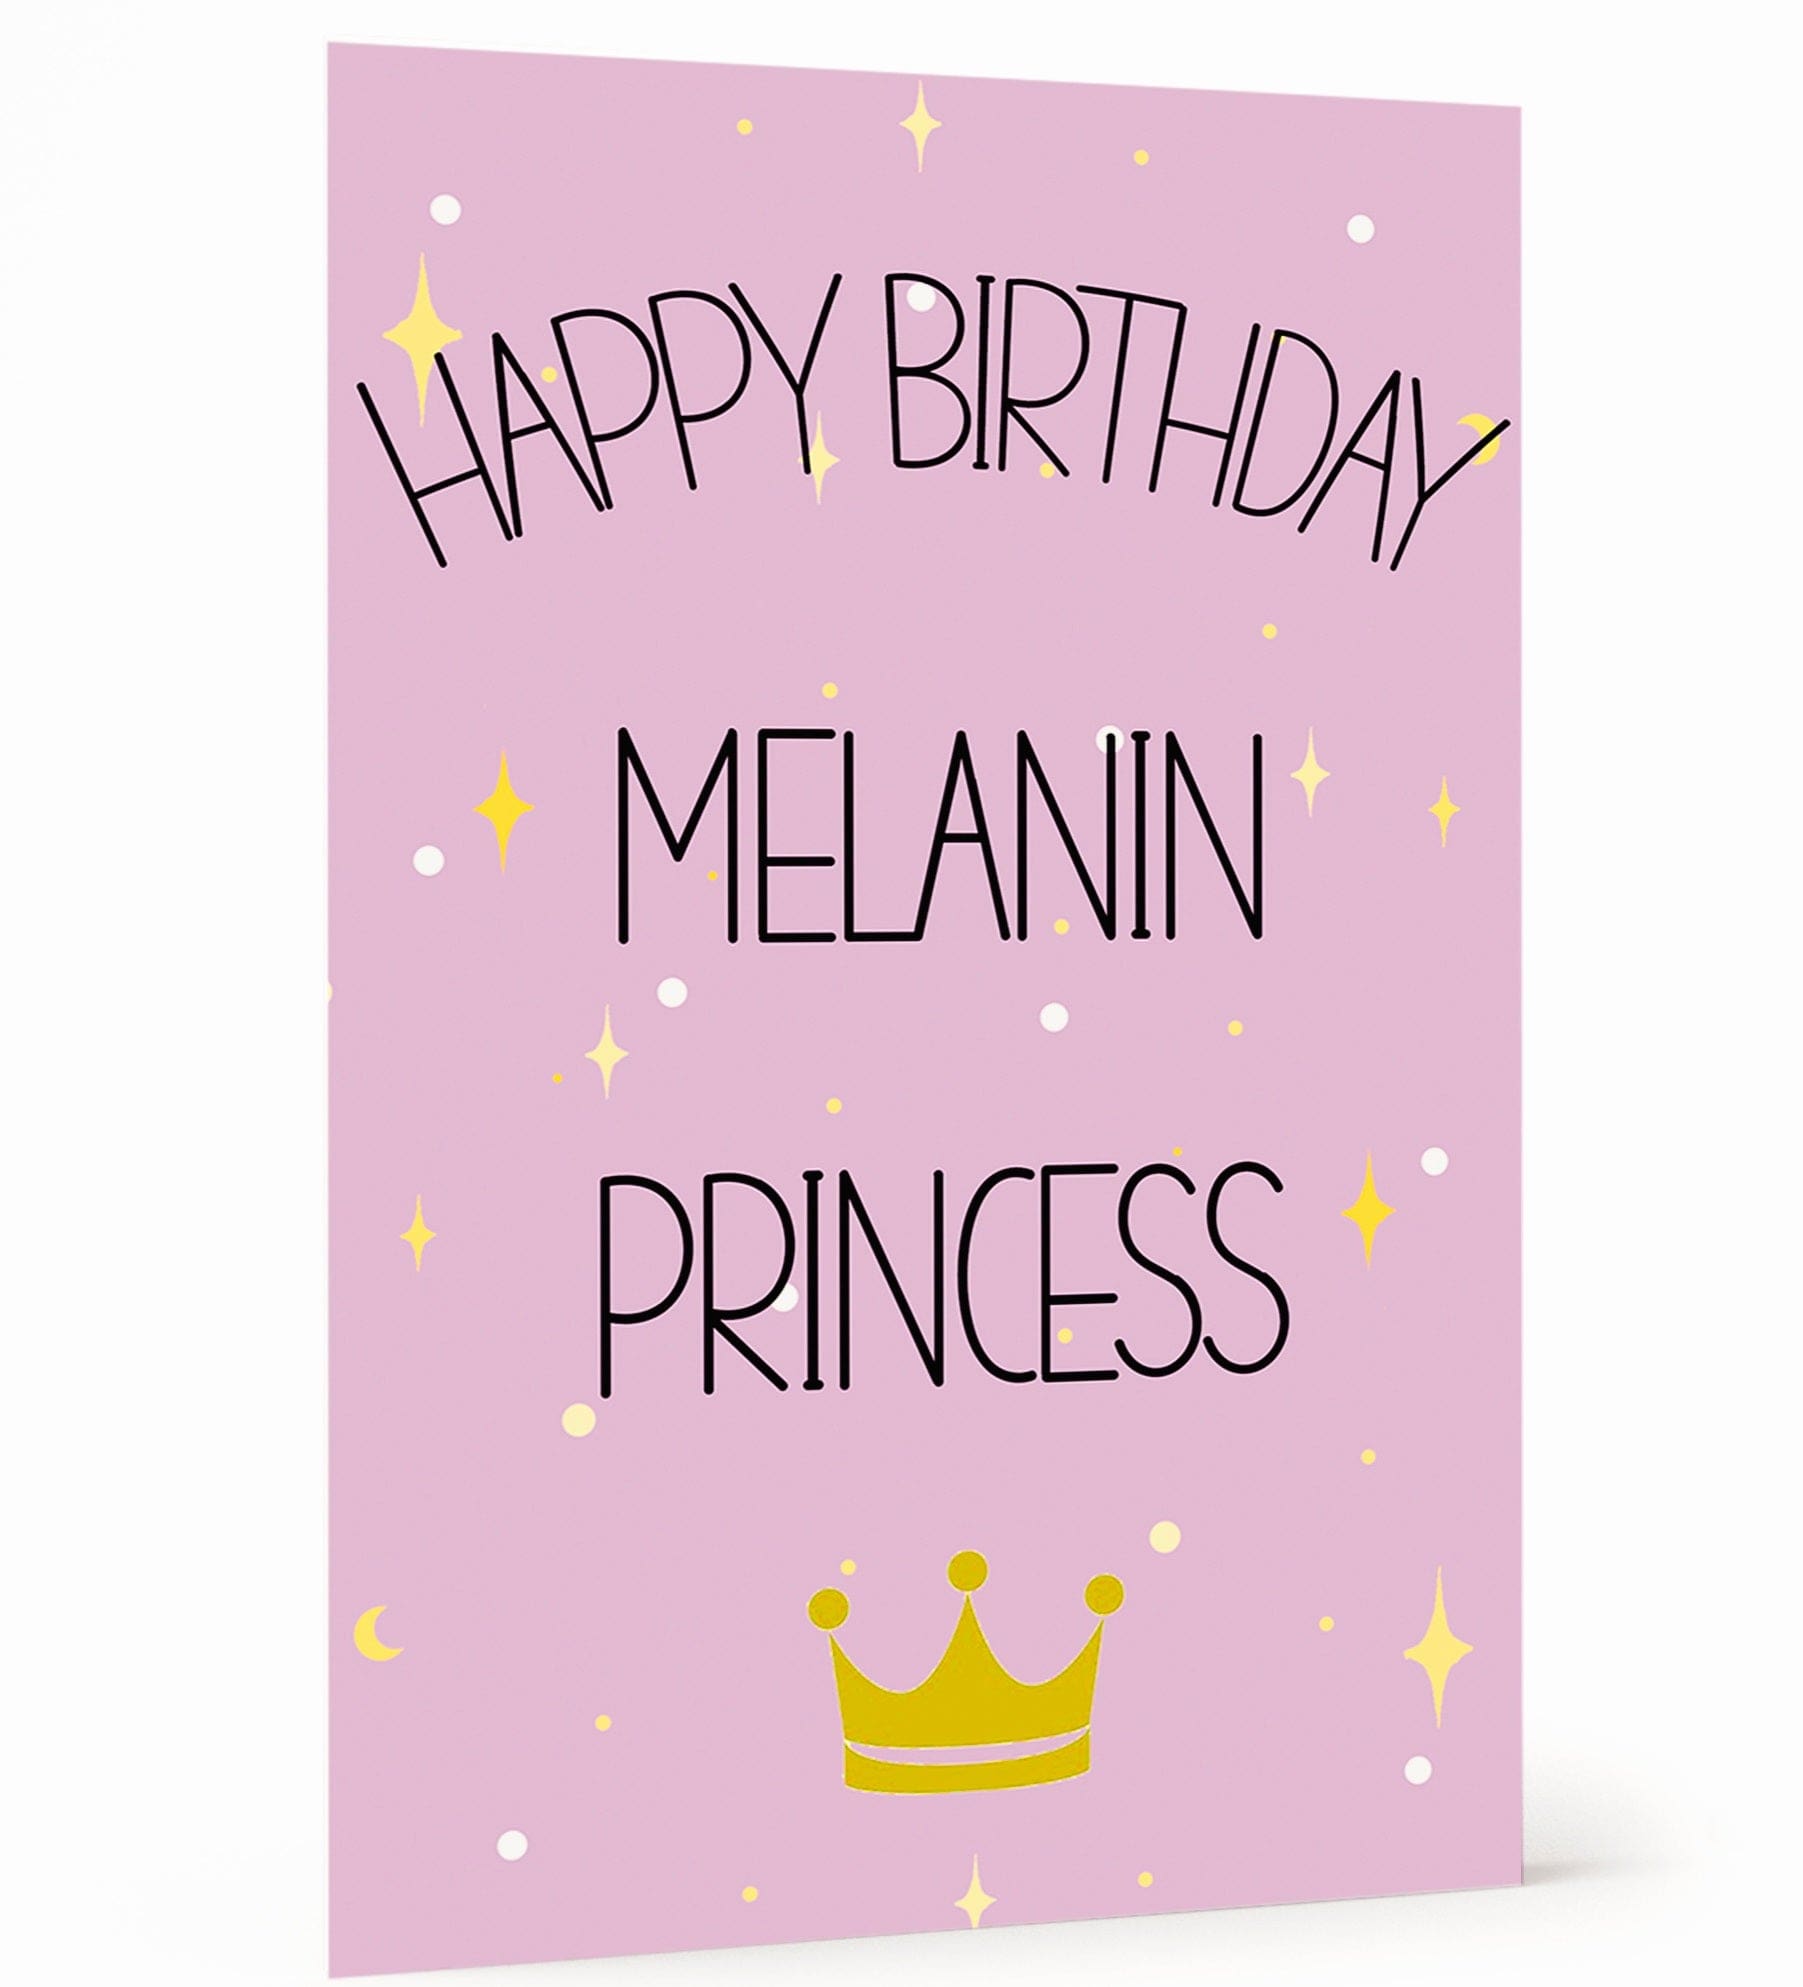 Melanin Princess Card, wakuda, african print fans, black-owned brands, black pound day